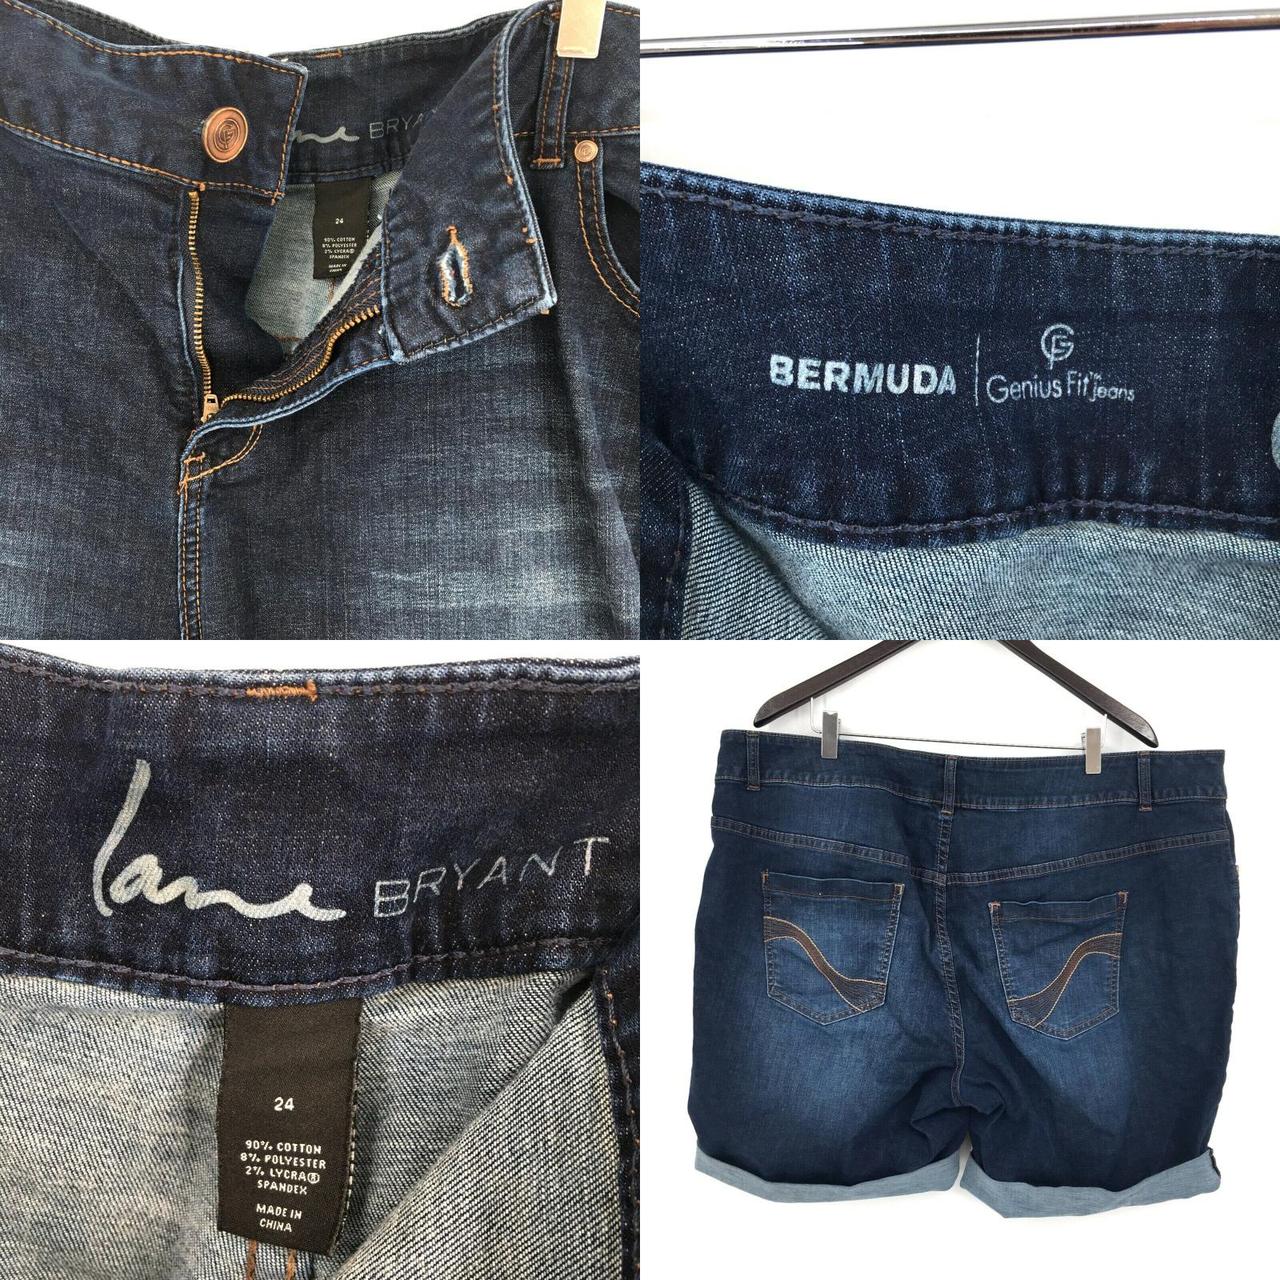 Product Image 4 - Lane Bryant Bermuda Jean Shorts